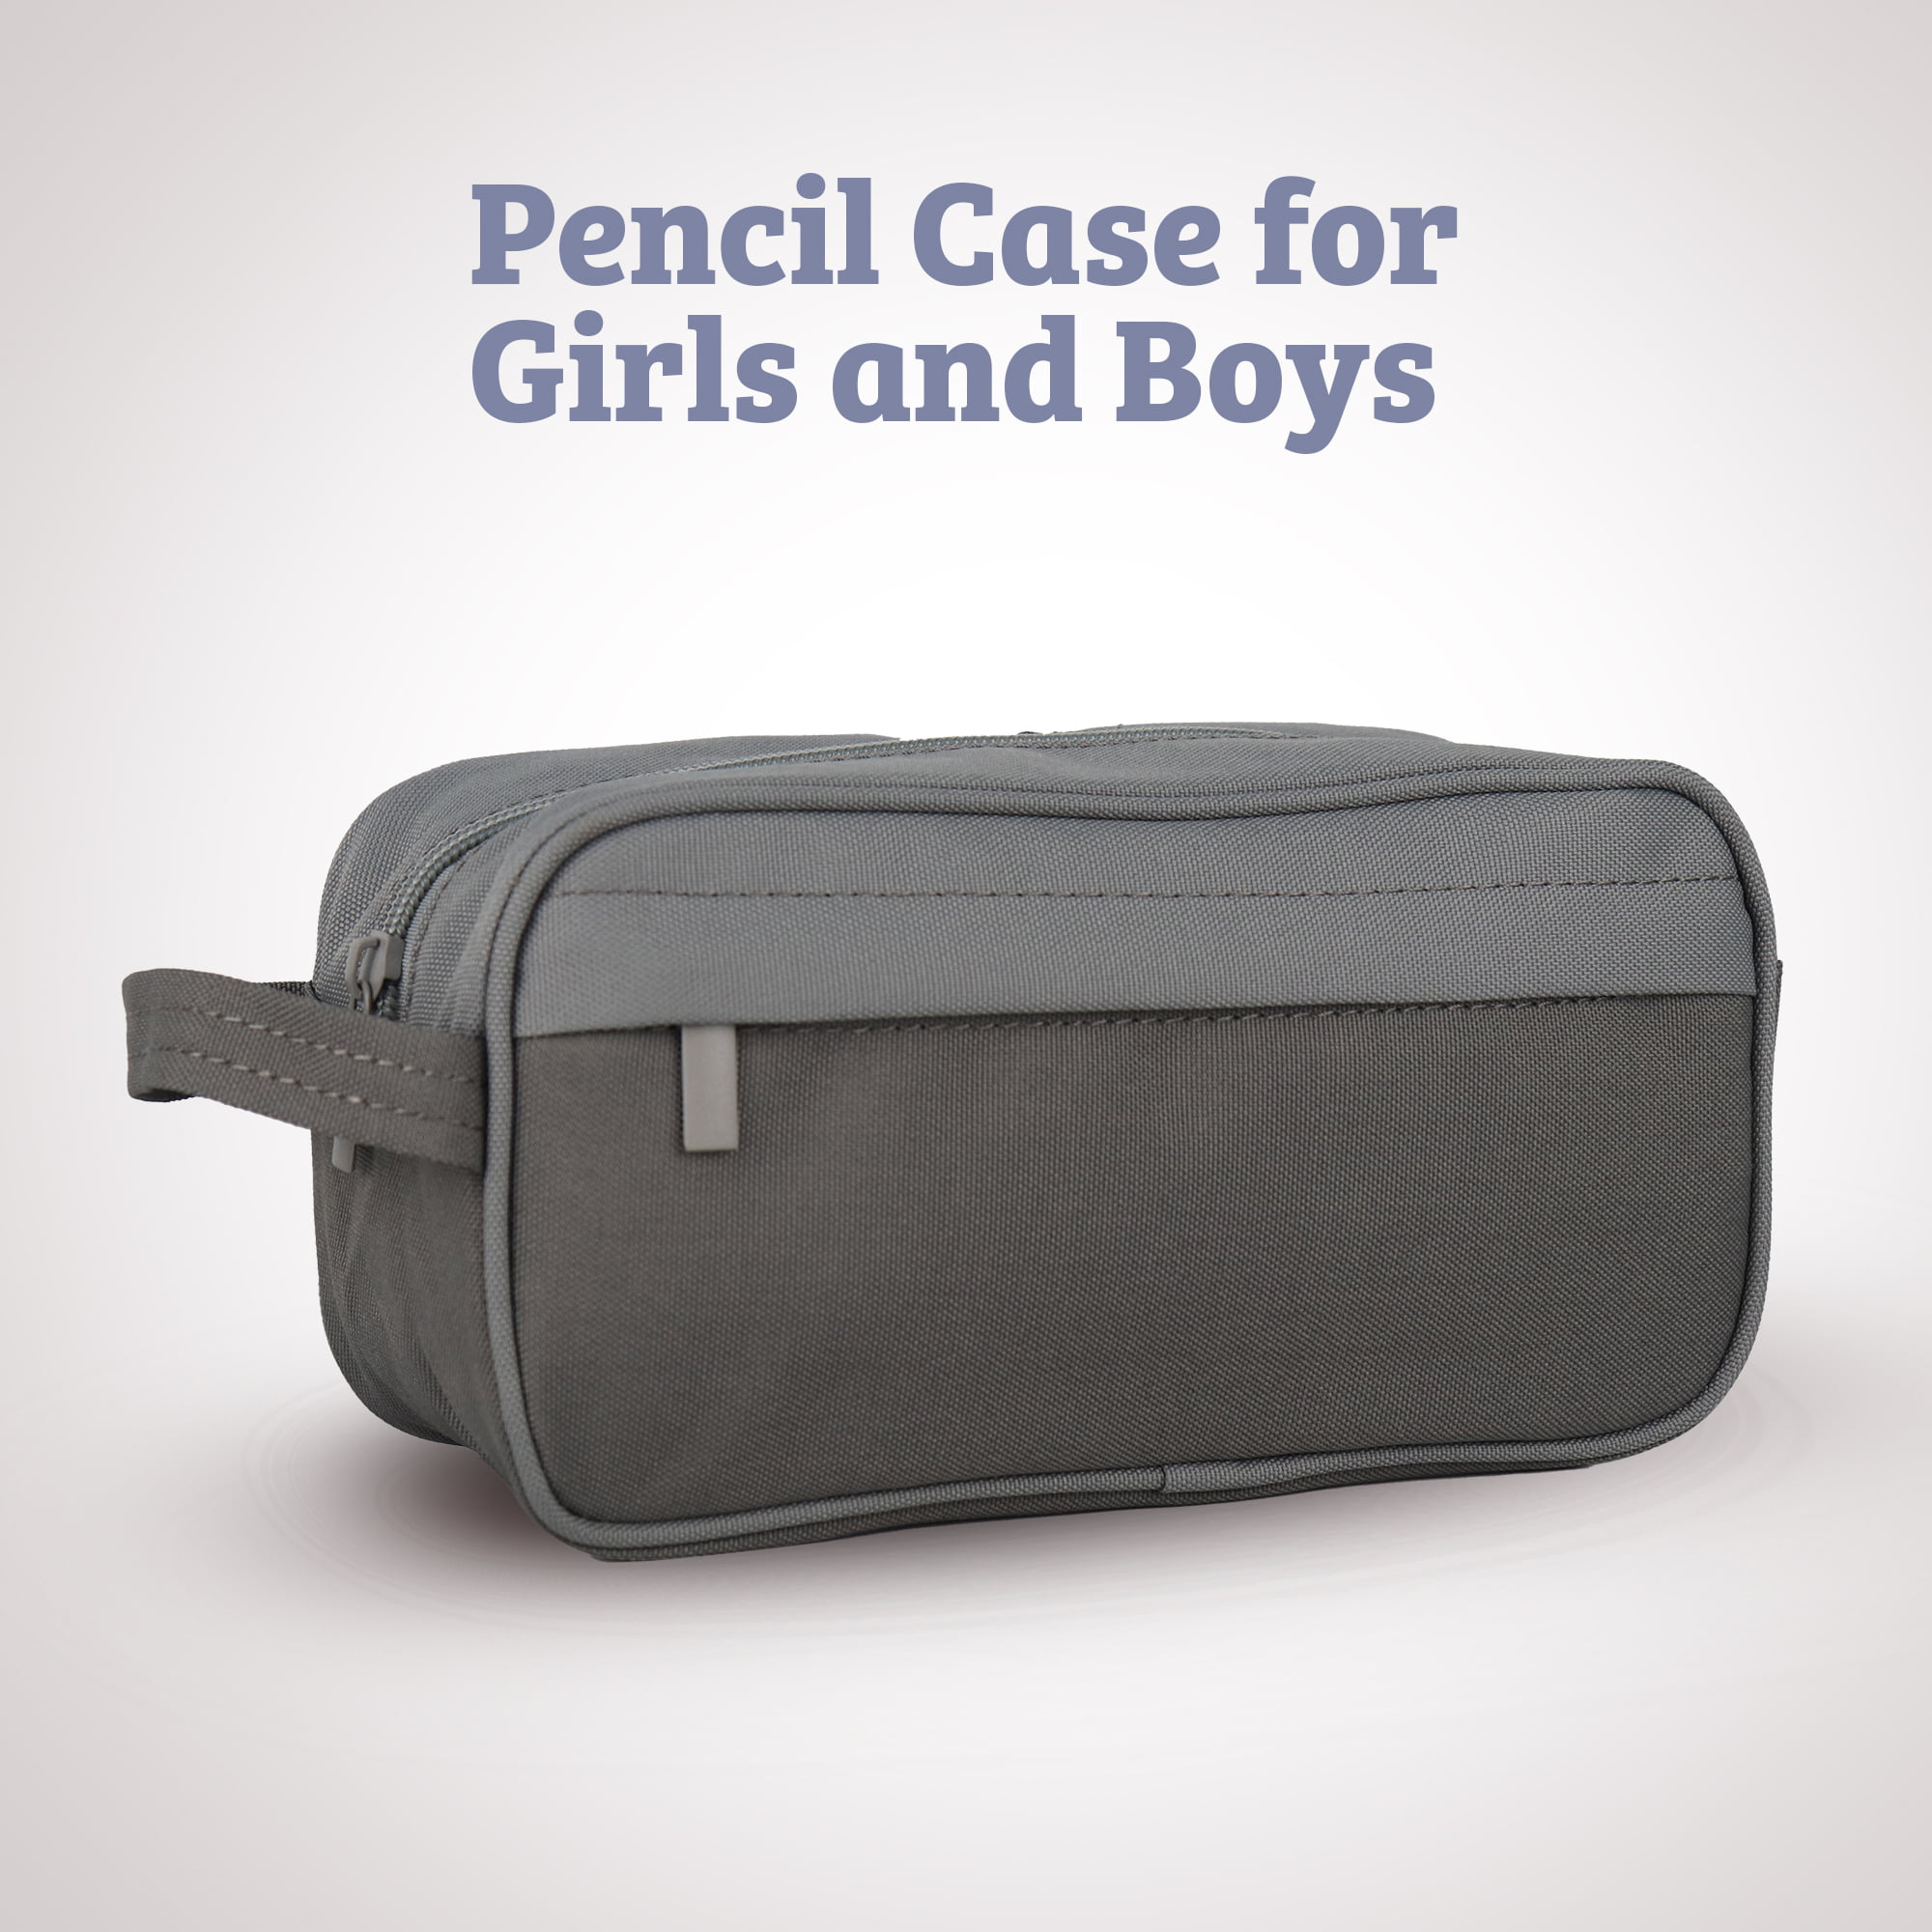 Yasen Pencil Case, Portable Pencil Holder Cute Pencil Case for Girls Boys, Stand-up Telescopic Pen Case School Office Pen Case Organizer for Teens